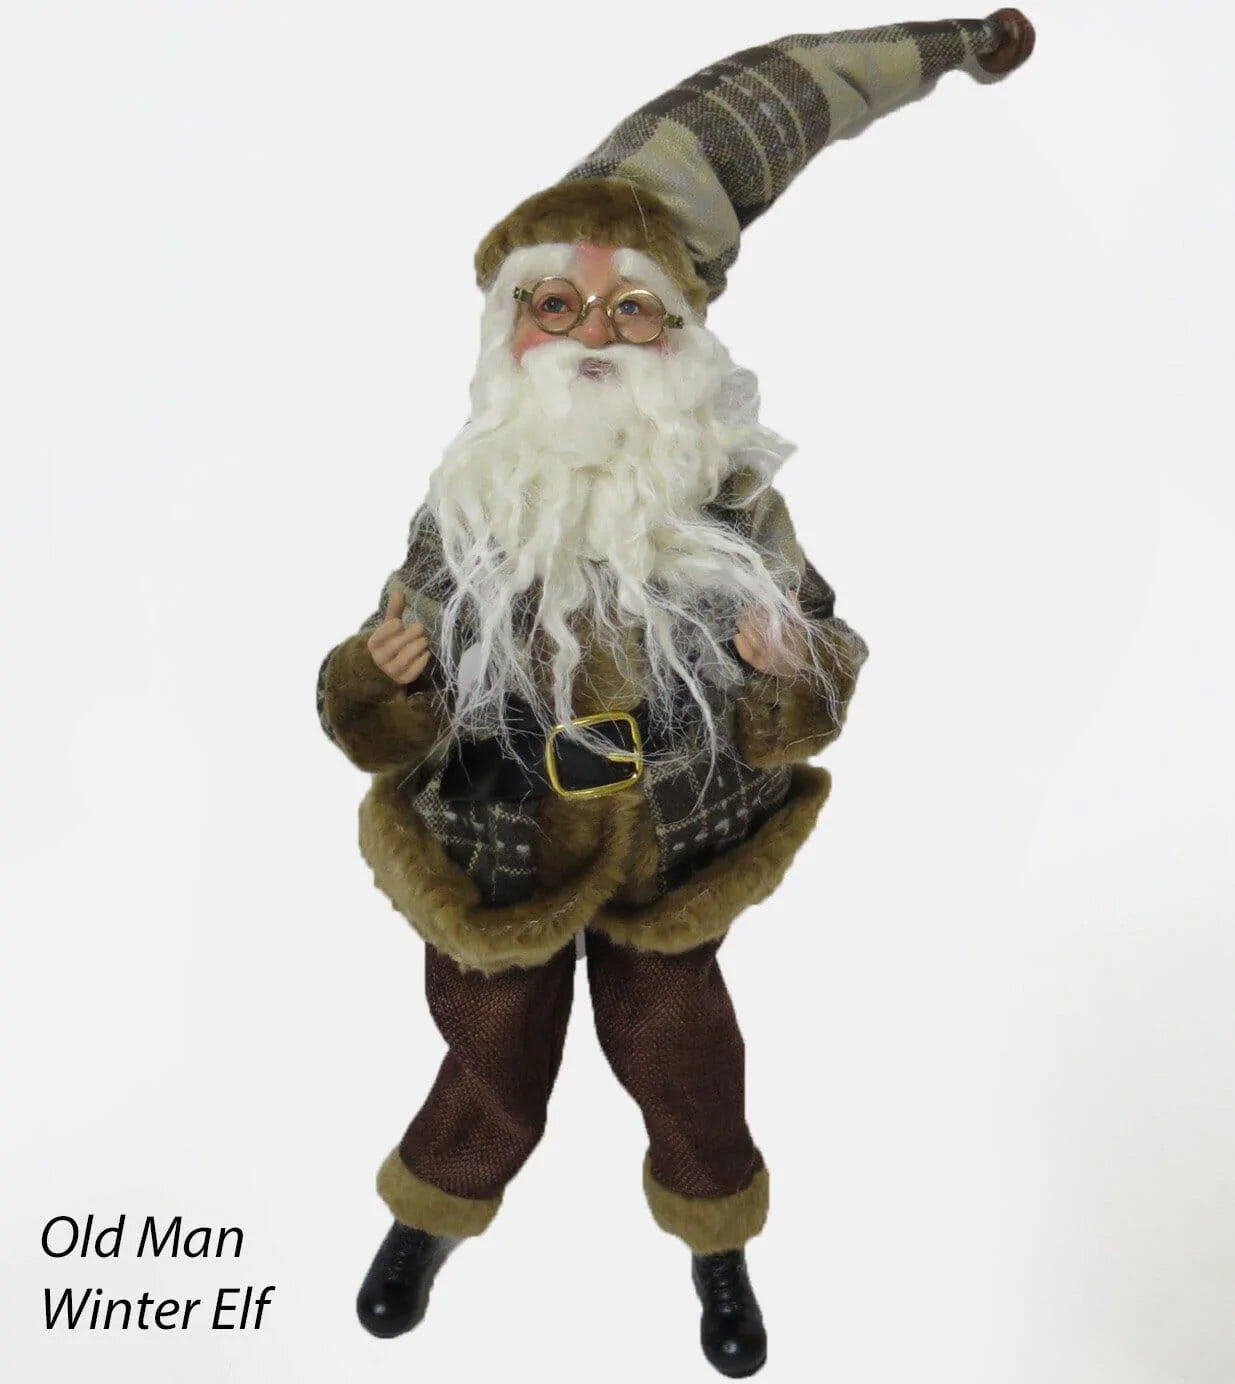 Old Man Winter Elf